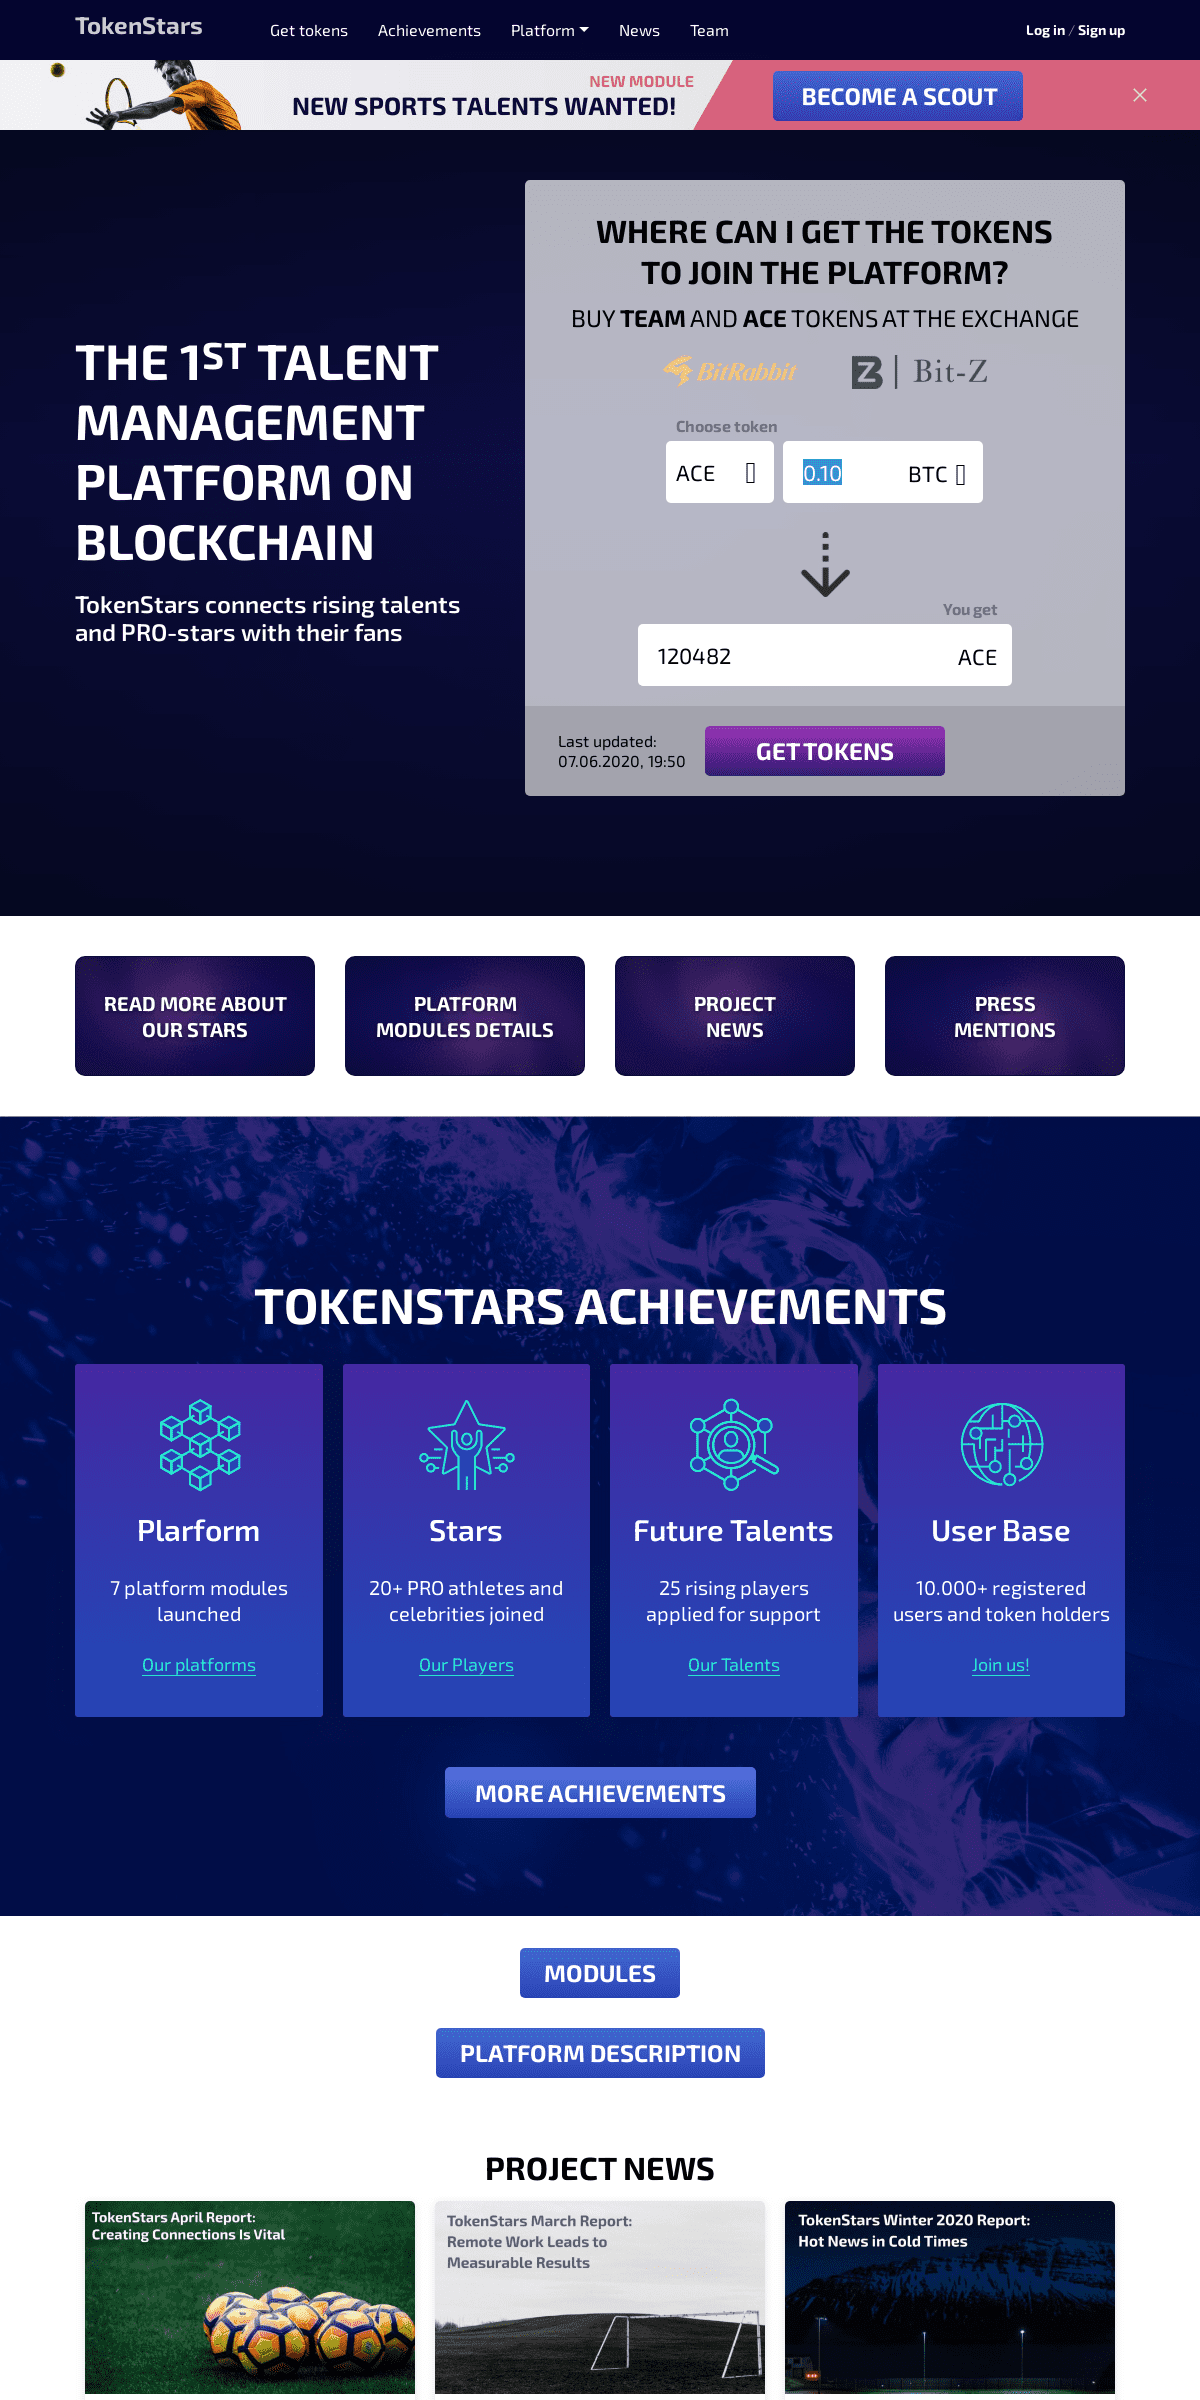 A complete backup of tokenstars.com